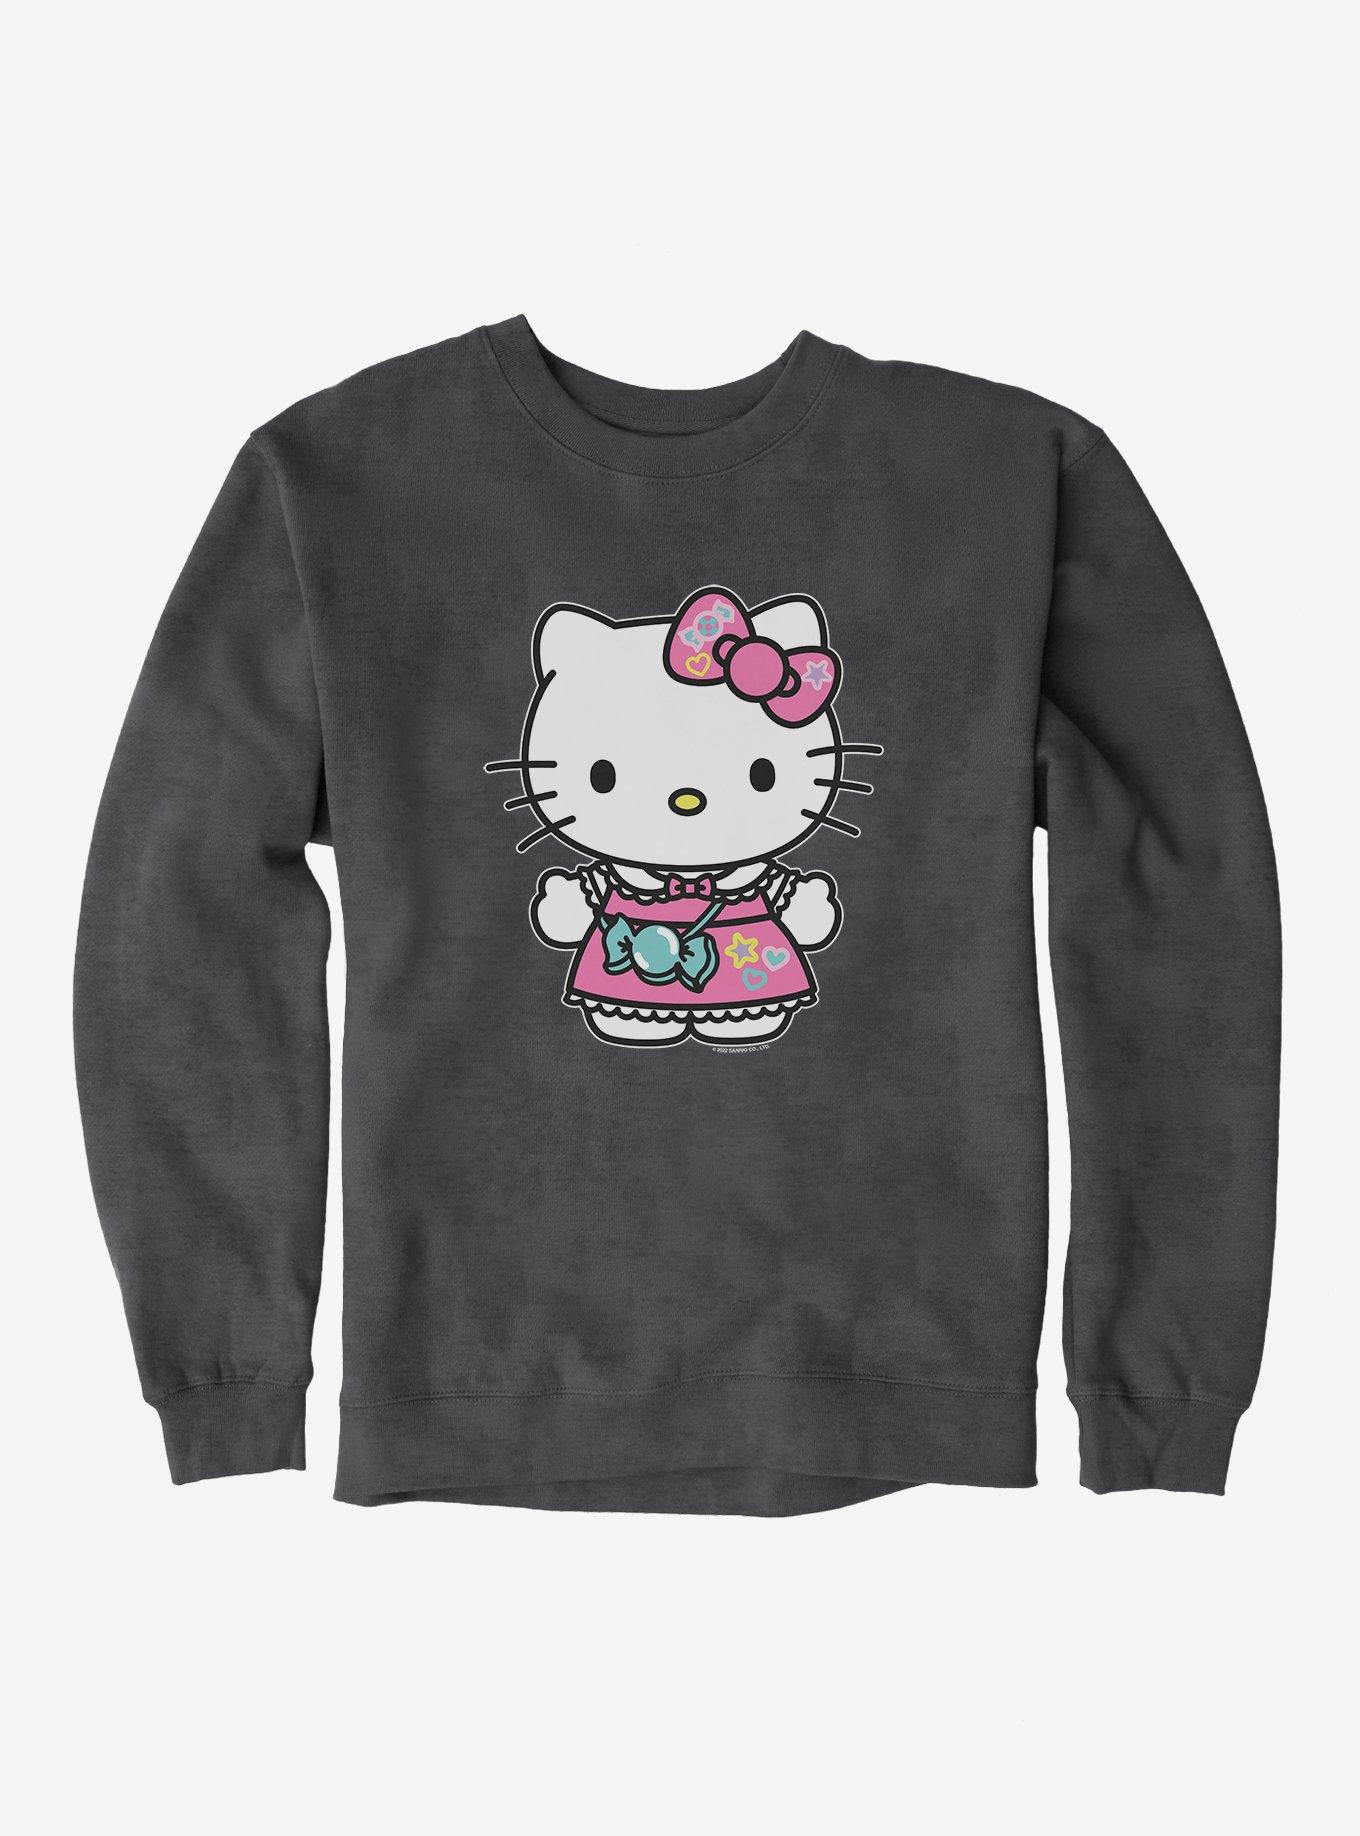 Hello Kitty Sugar Rush Candy Purse Sweatshirt